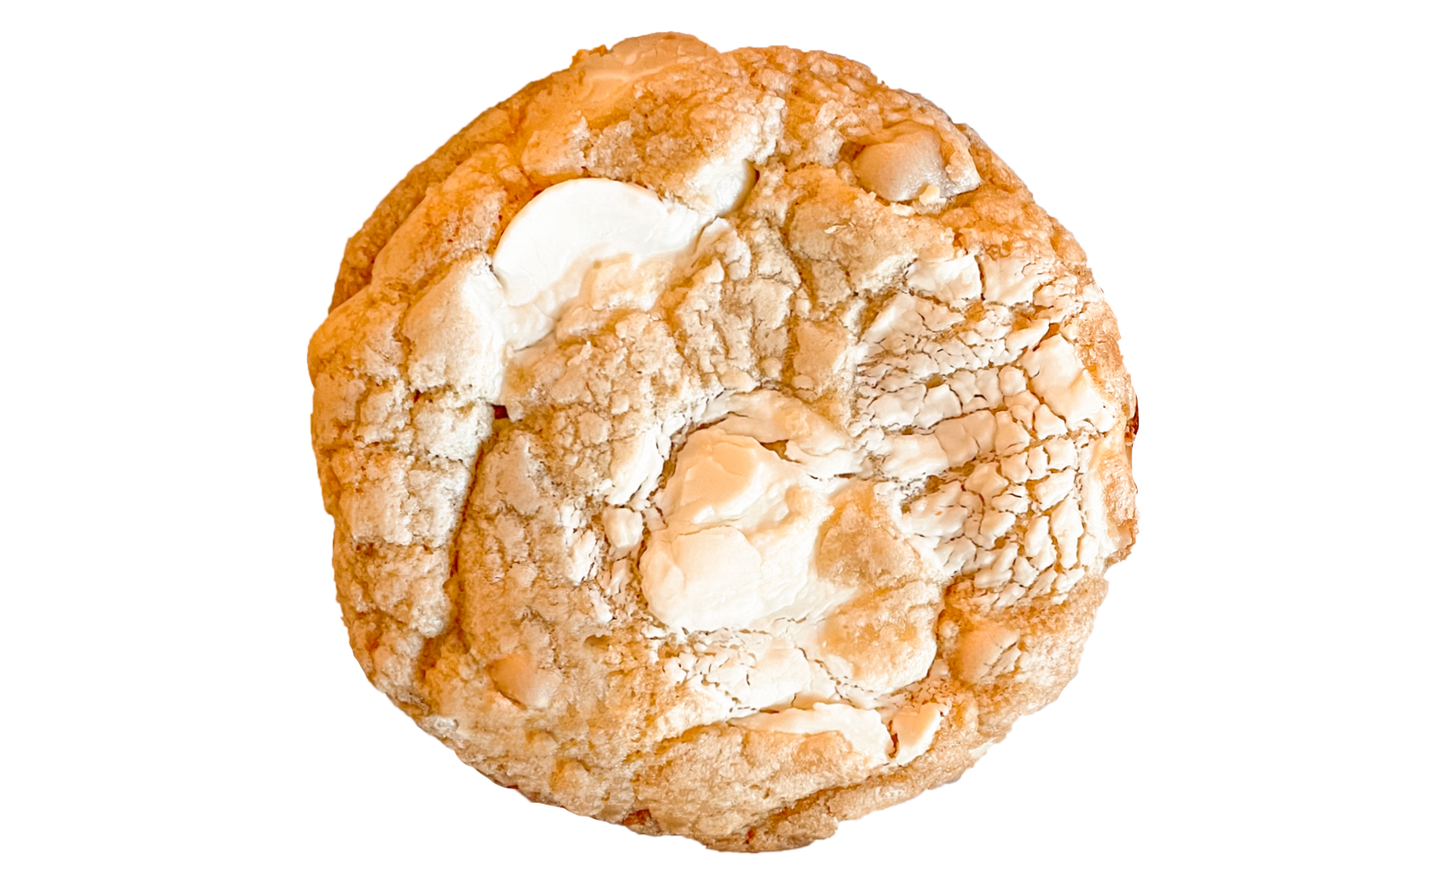 macadamia nut cookie with white chocolate